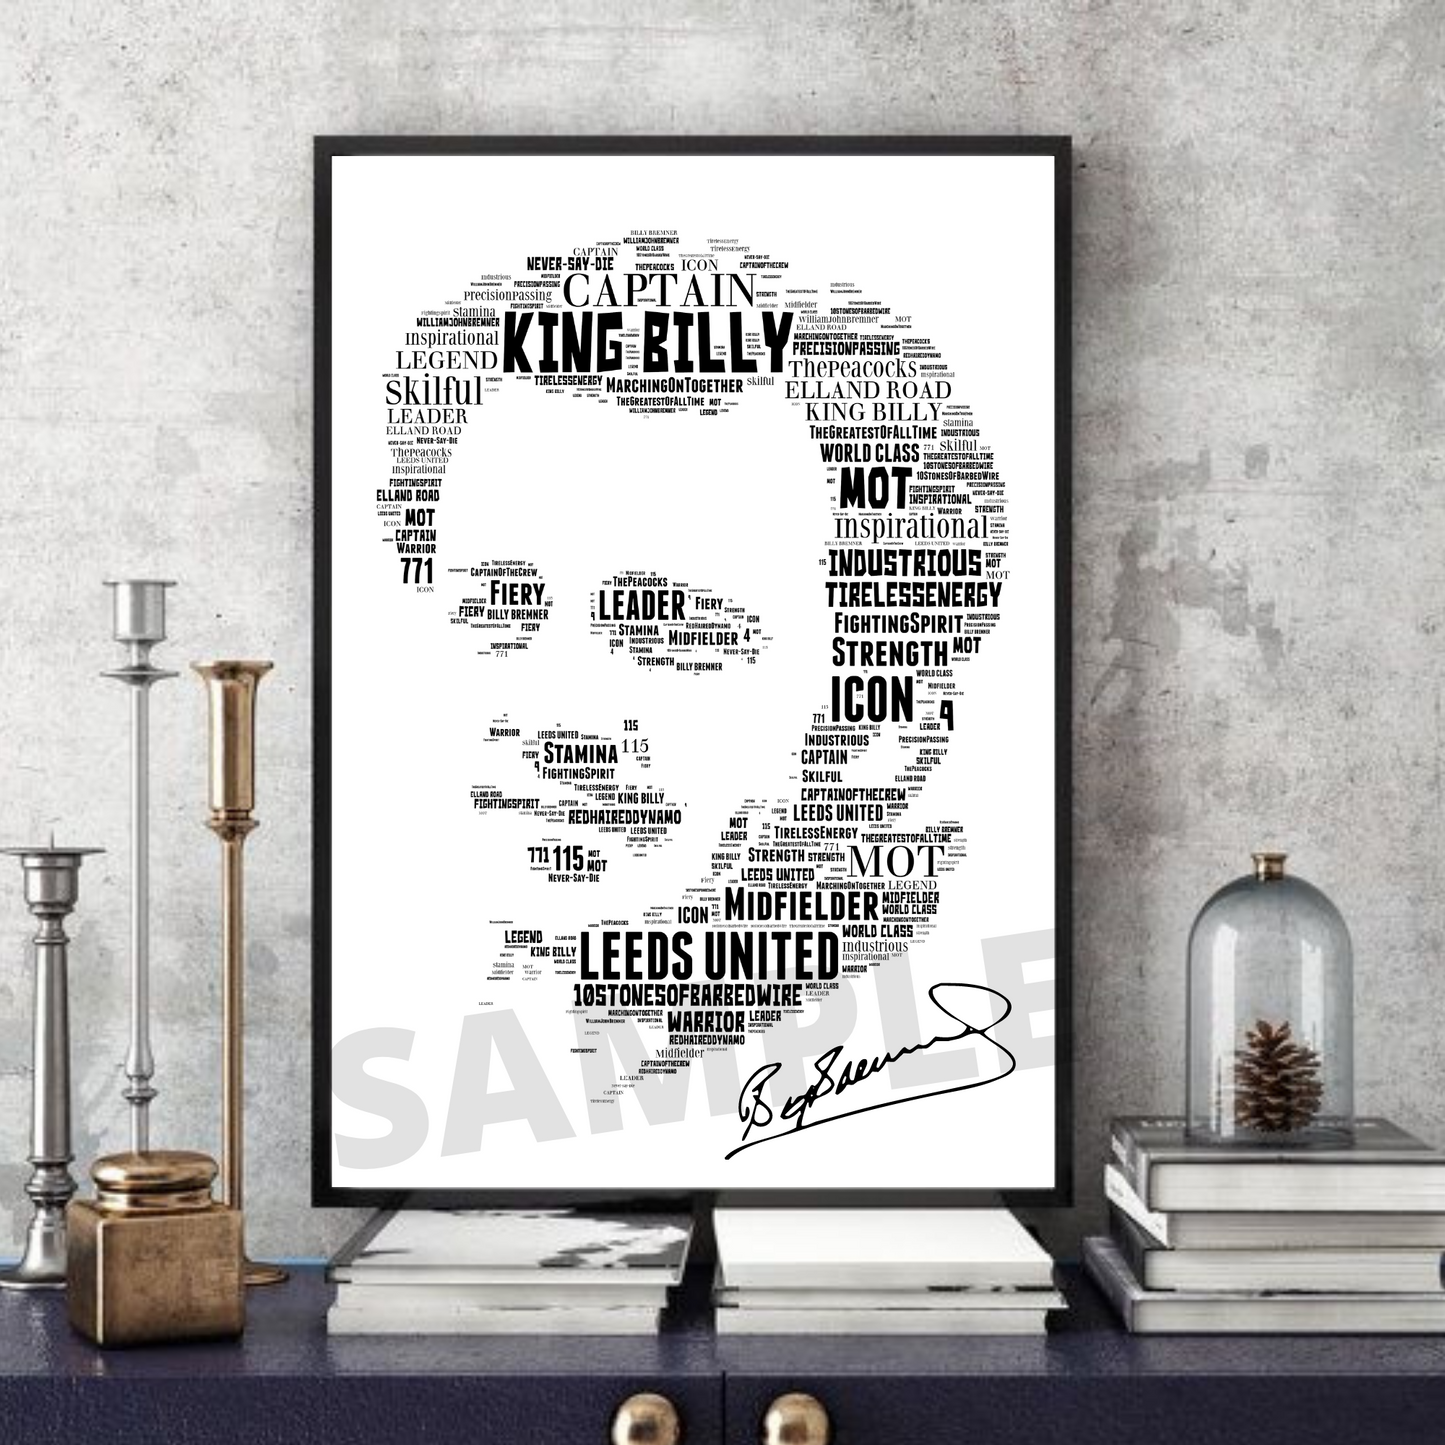 Billy Bremner LUFC Leeds Utd Football Word Portrait Memorabilia/Collectable signed